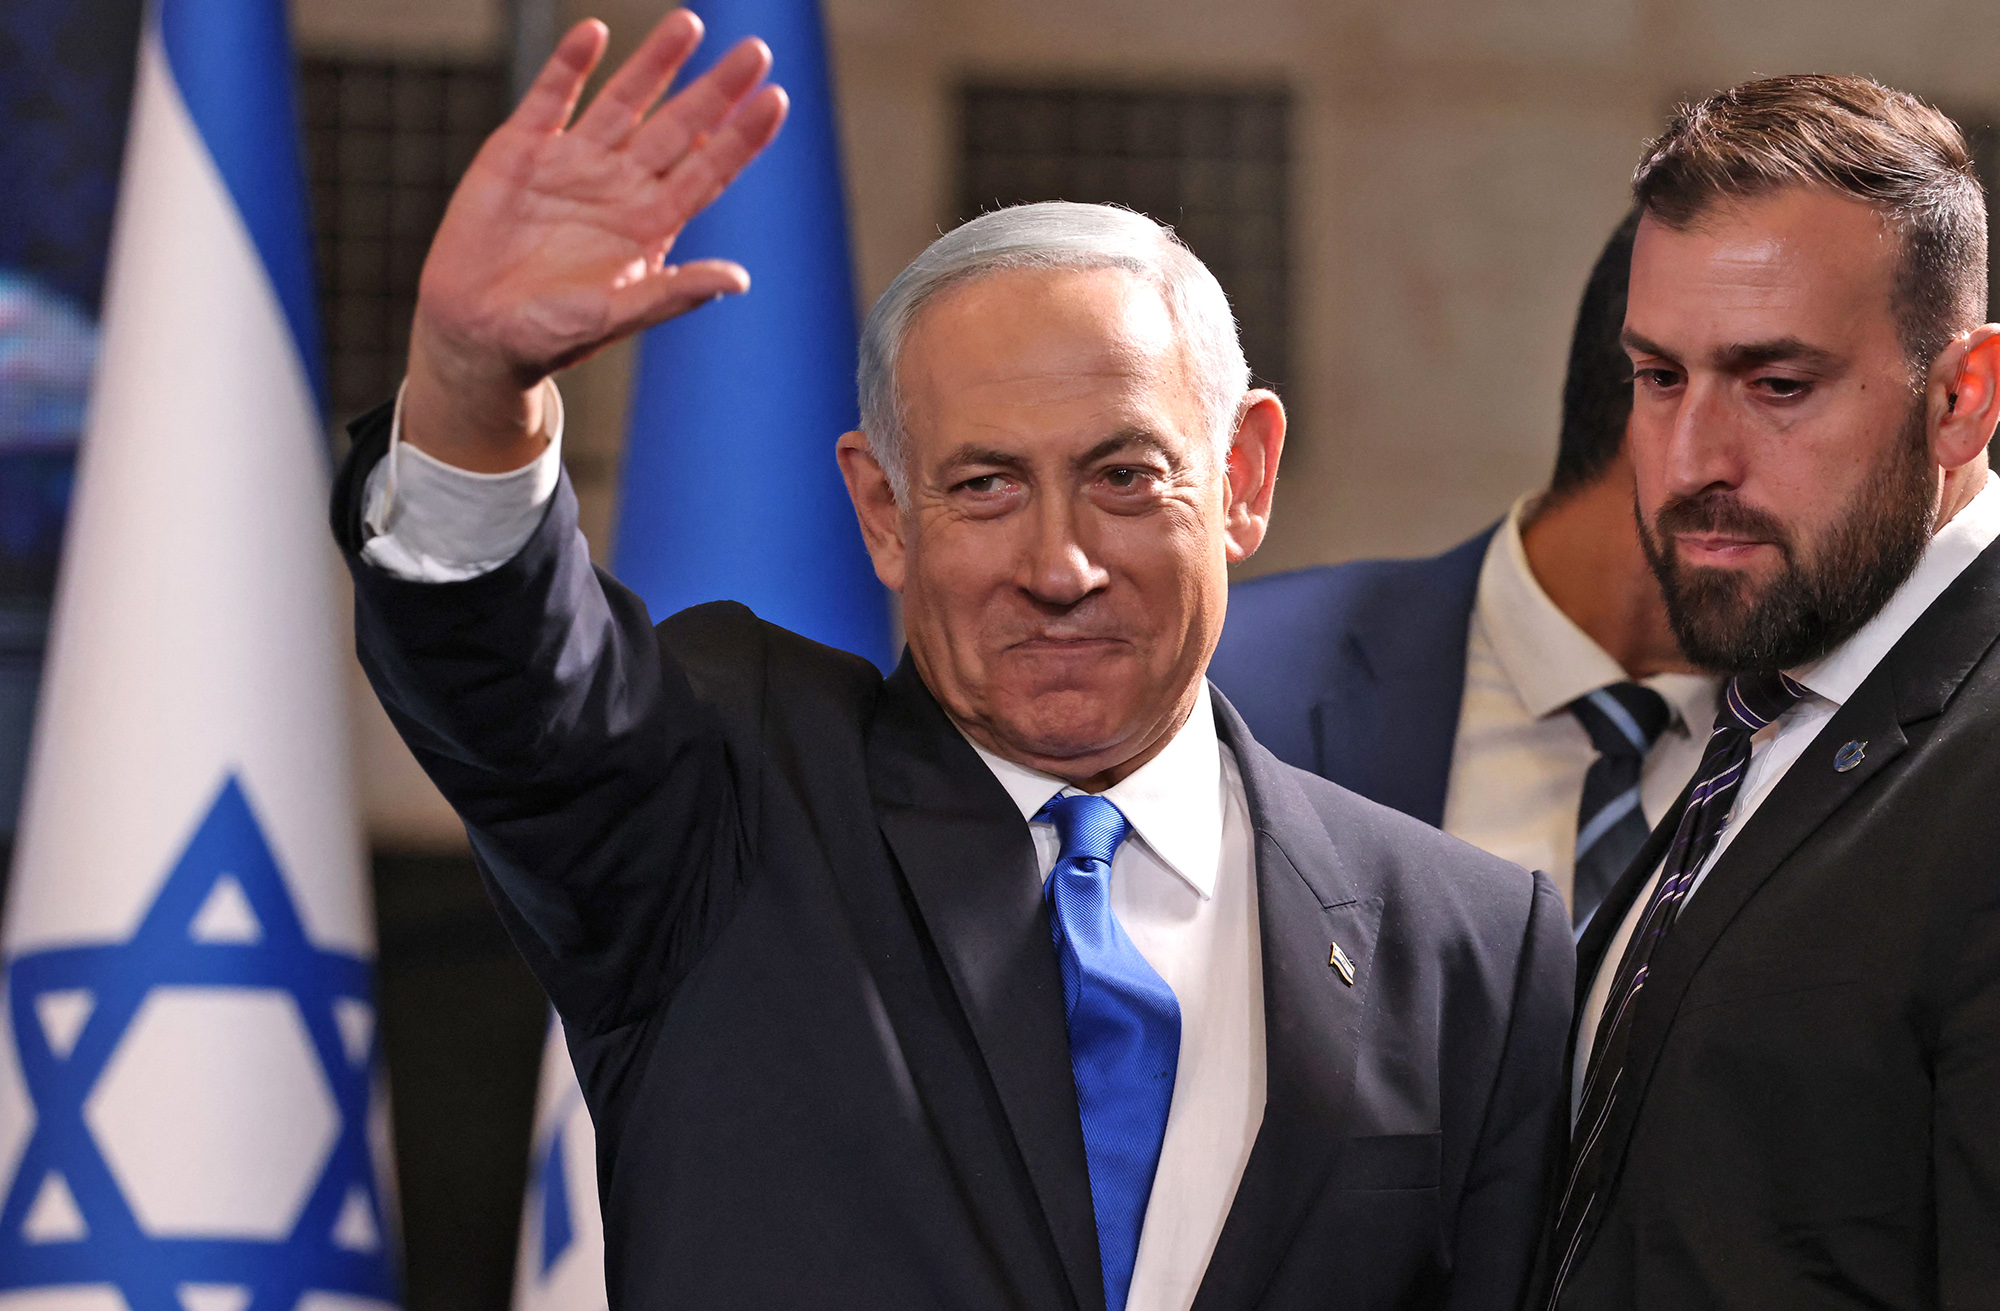 Anti-Semitic threat against Italian opposition leader as Netanyahu arrives